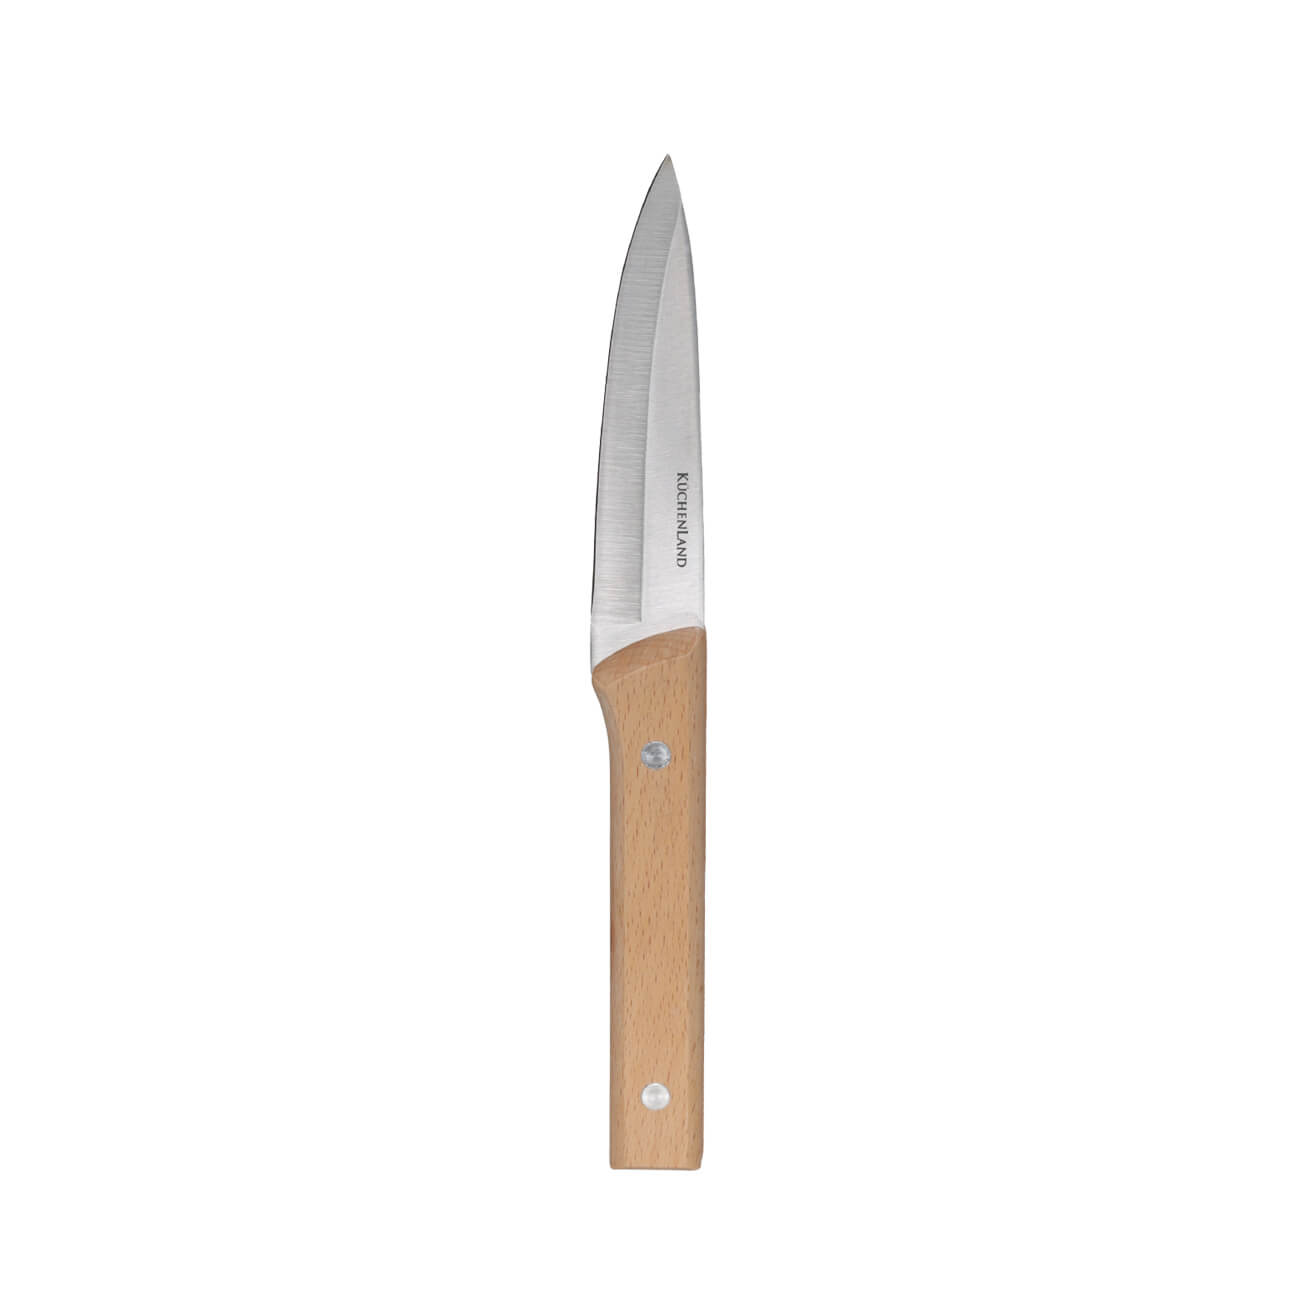 Нож для чистки овощей, 9 см, сталь/дерево, Eco home нож для чистки овощей ingenio k2071814